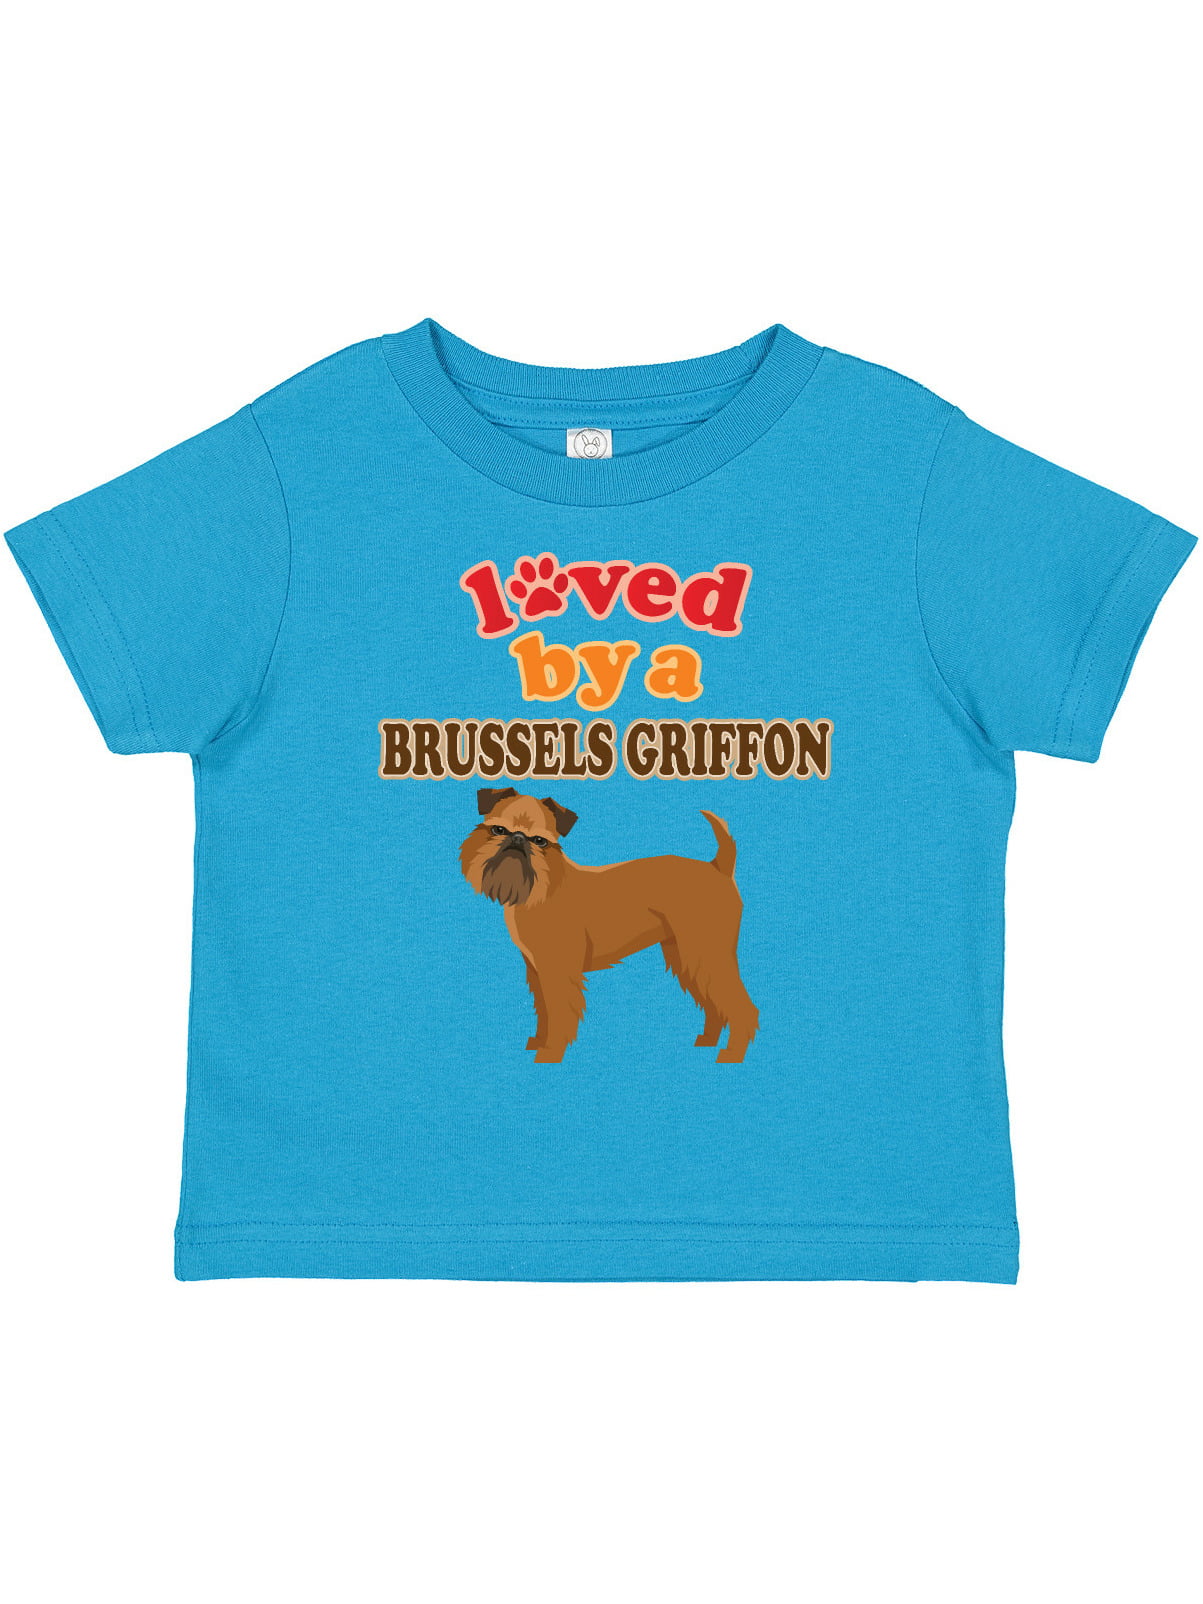 Brussels Griffon Owner Tee Brussels Griffon T shirt Brussels Griffon Dog Gift Brussels Griffon Lover Gift Unisex Cotton T shirt